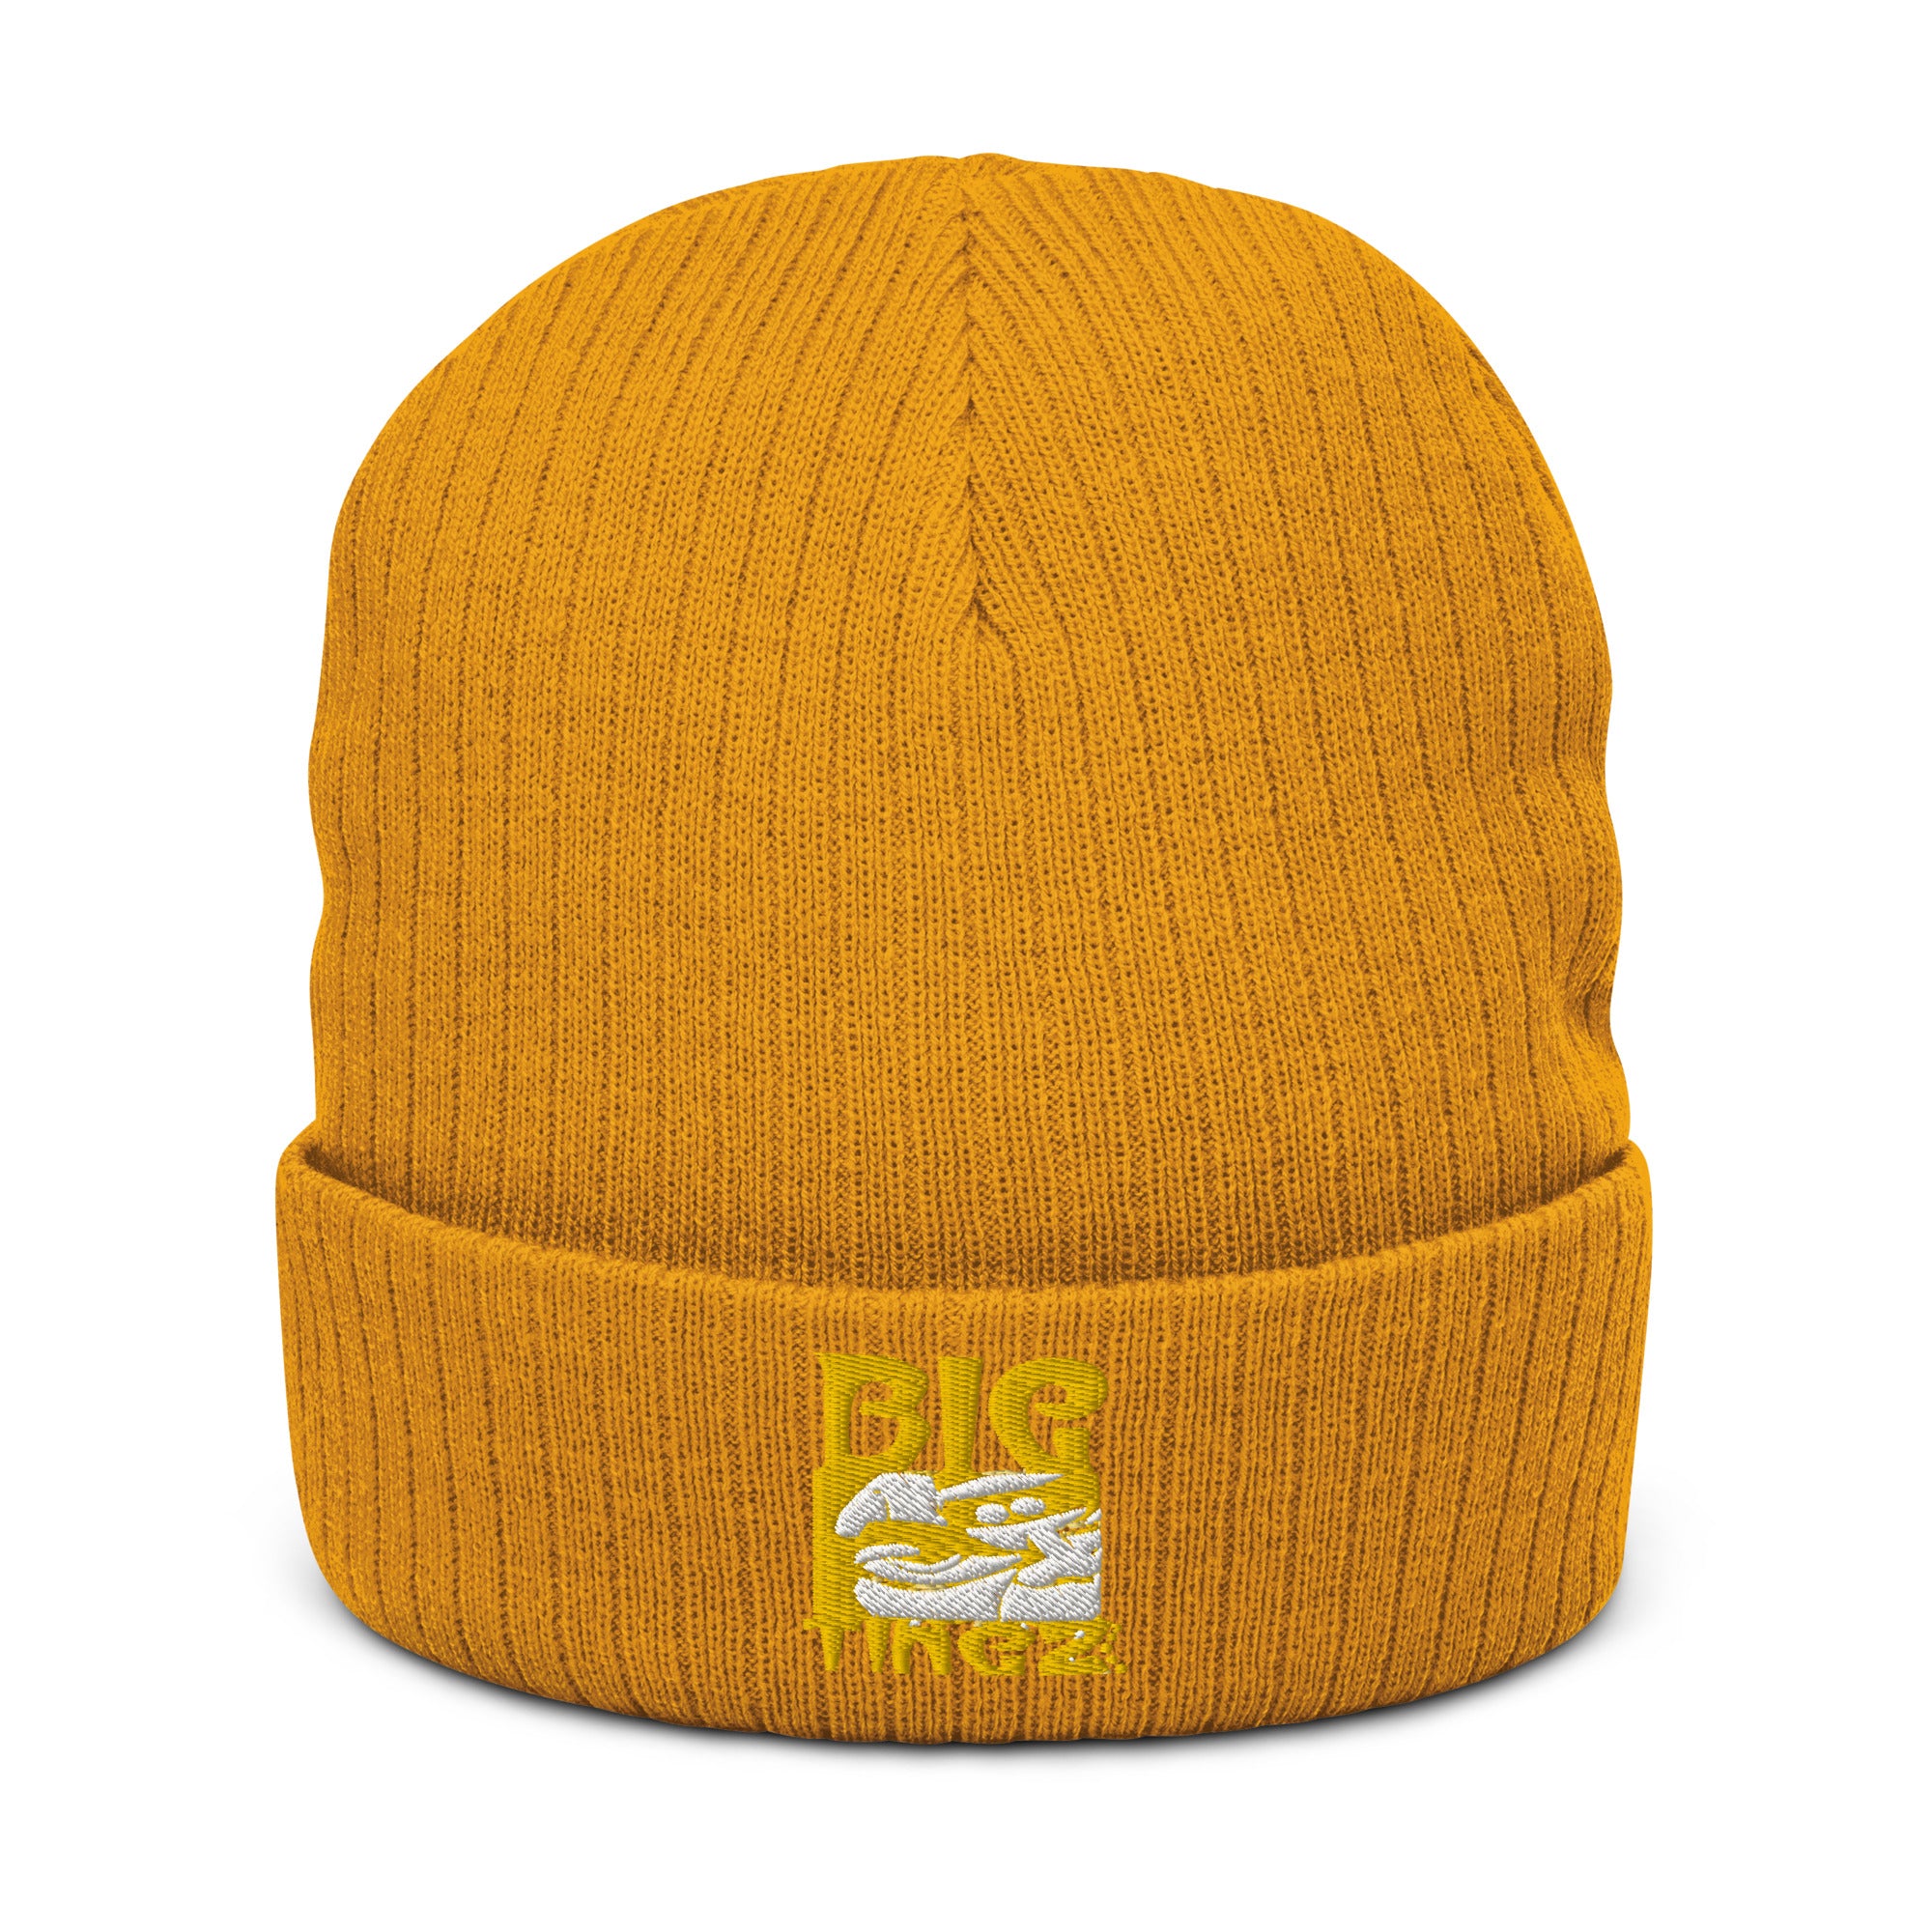 Ribbed knit beanie yellow logo #2